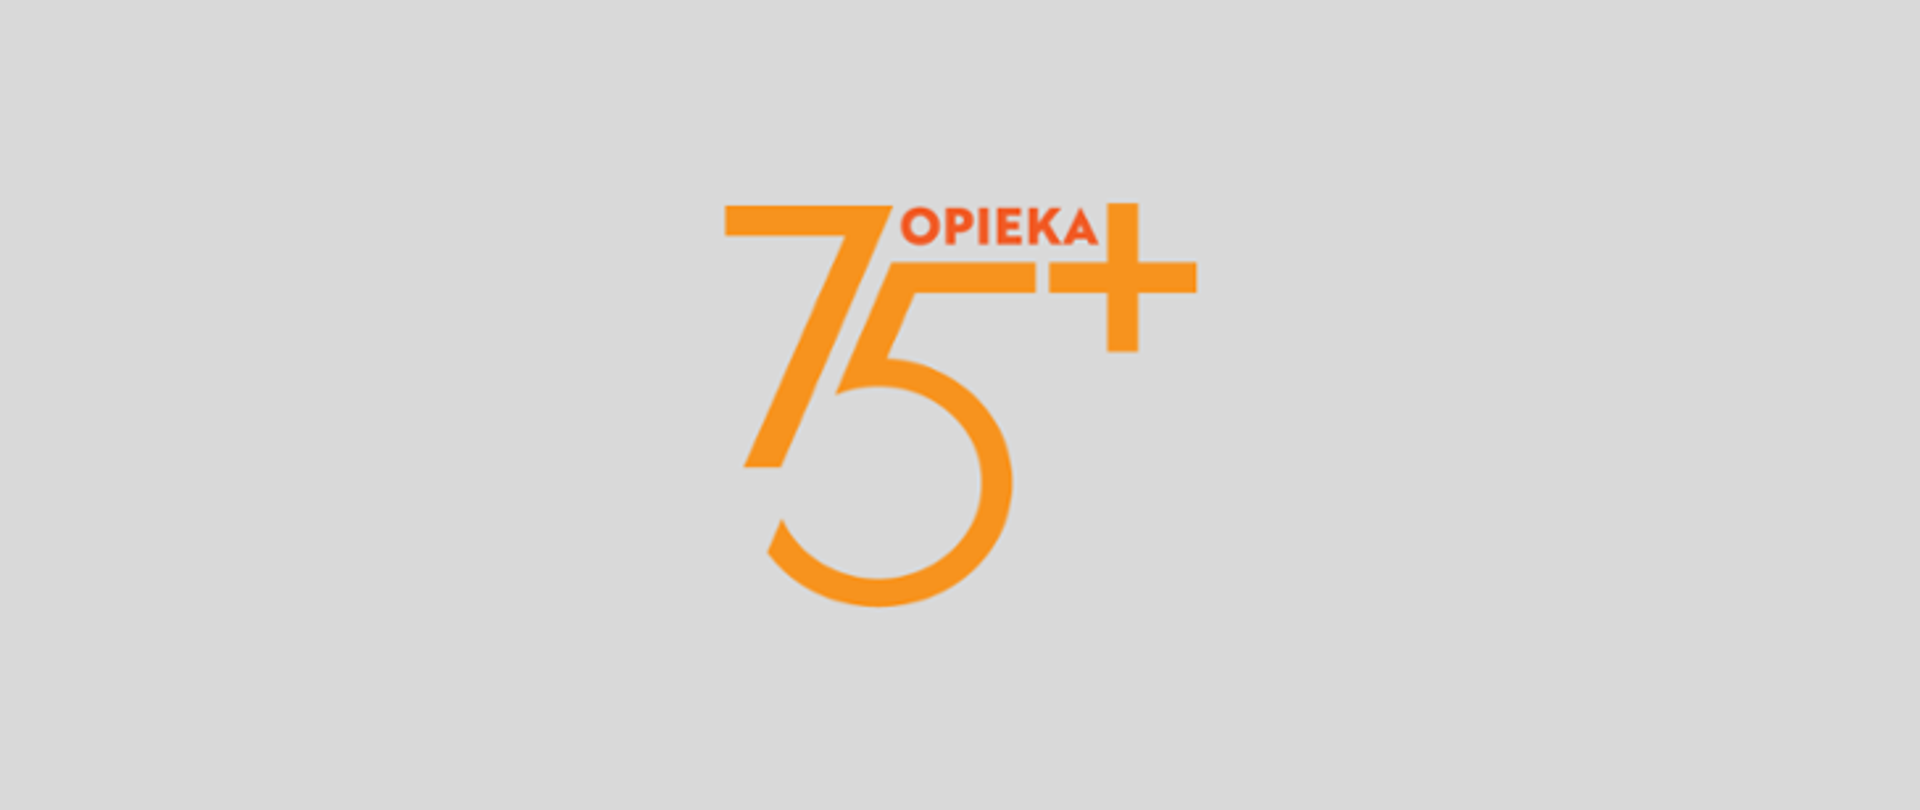 Logo programu Opieka 75 Plus 